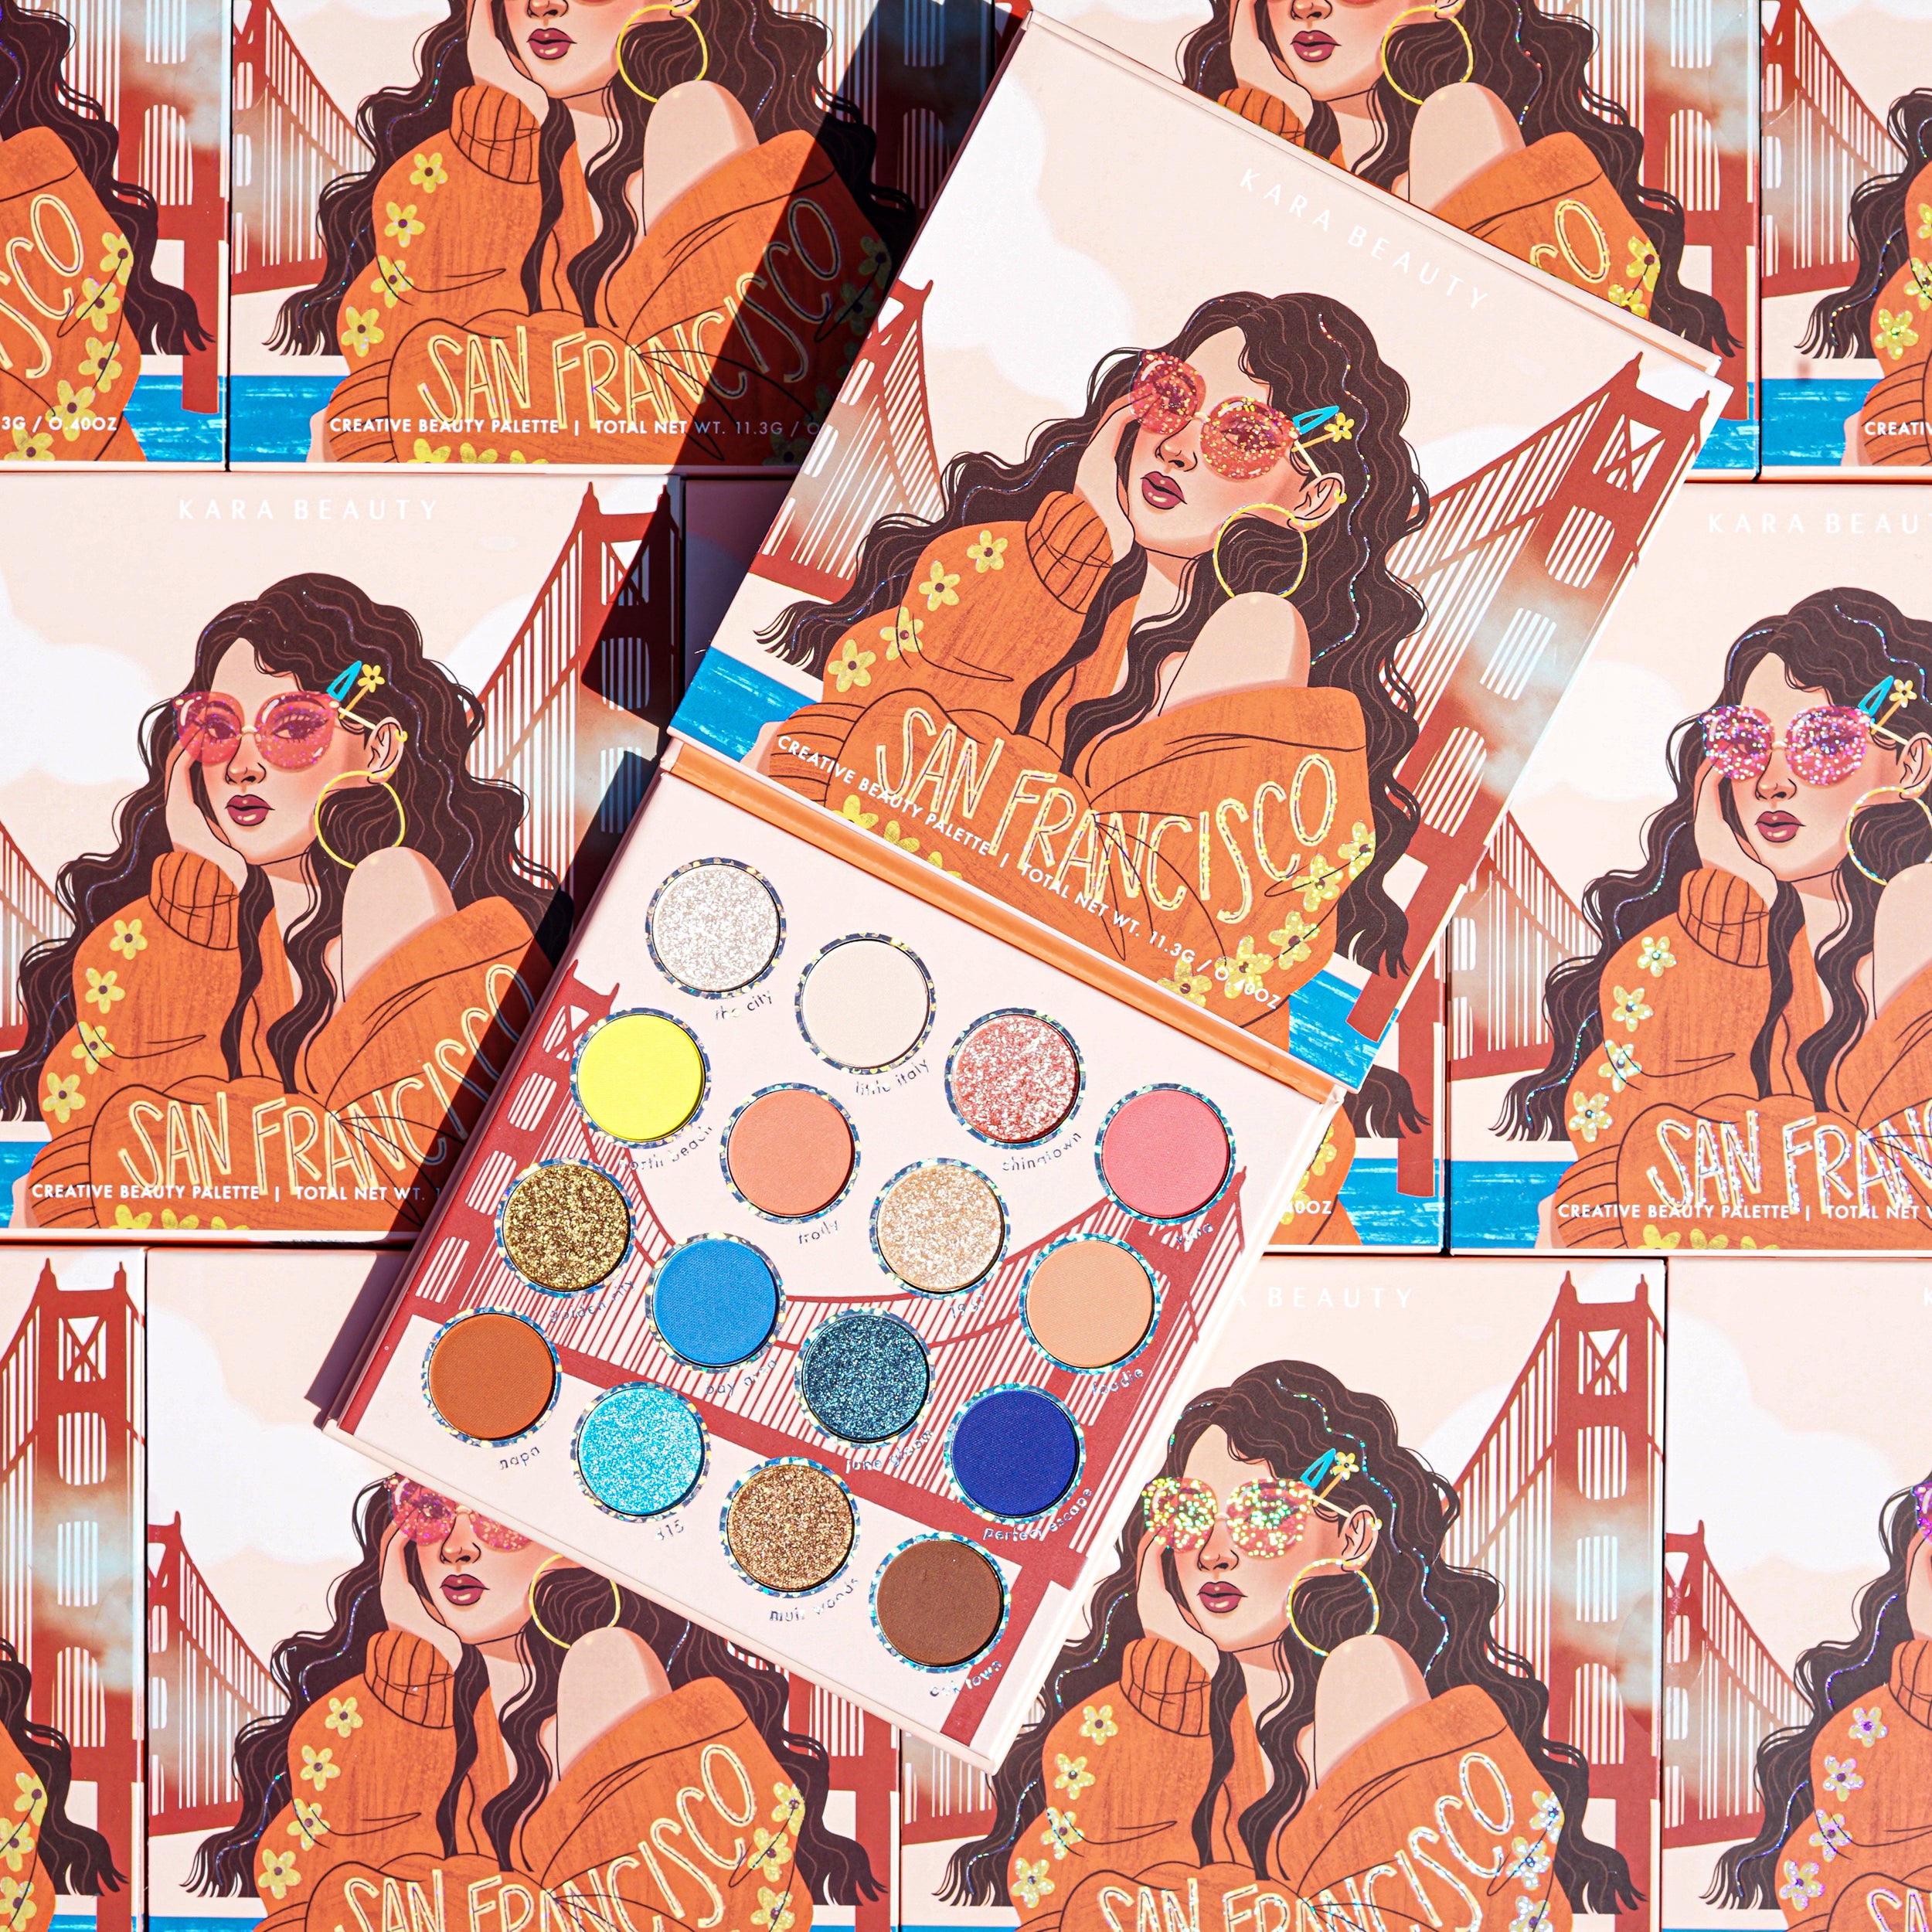 Kara Beauty's San Francisco 16-Shades Multi-Finish Vegan Eyeshadow Palette